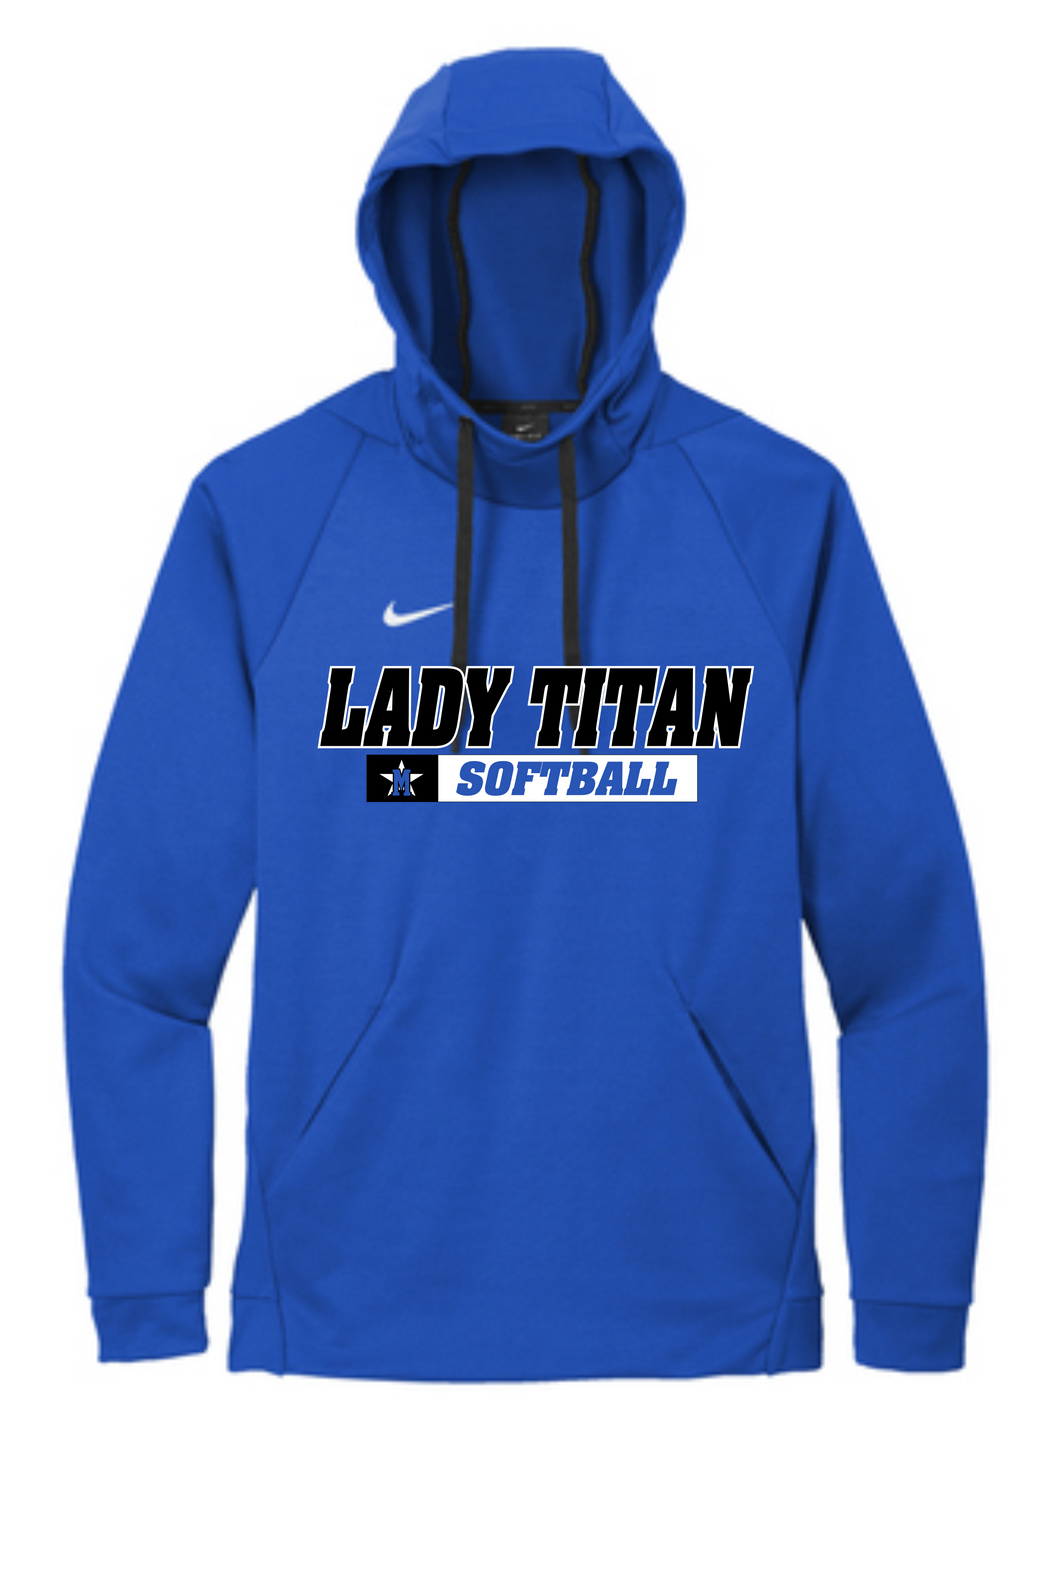 Lady Titan Softball Nike Hoodie